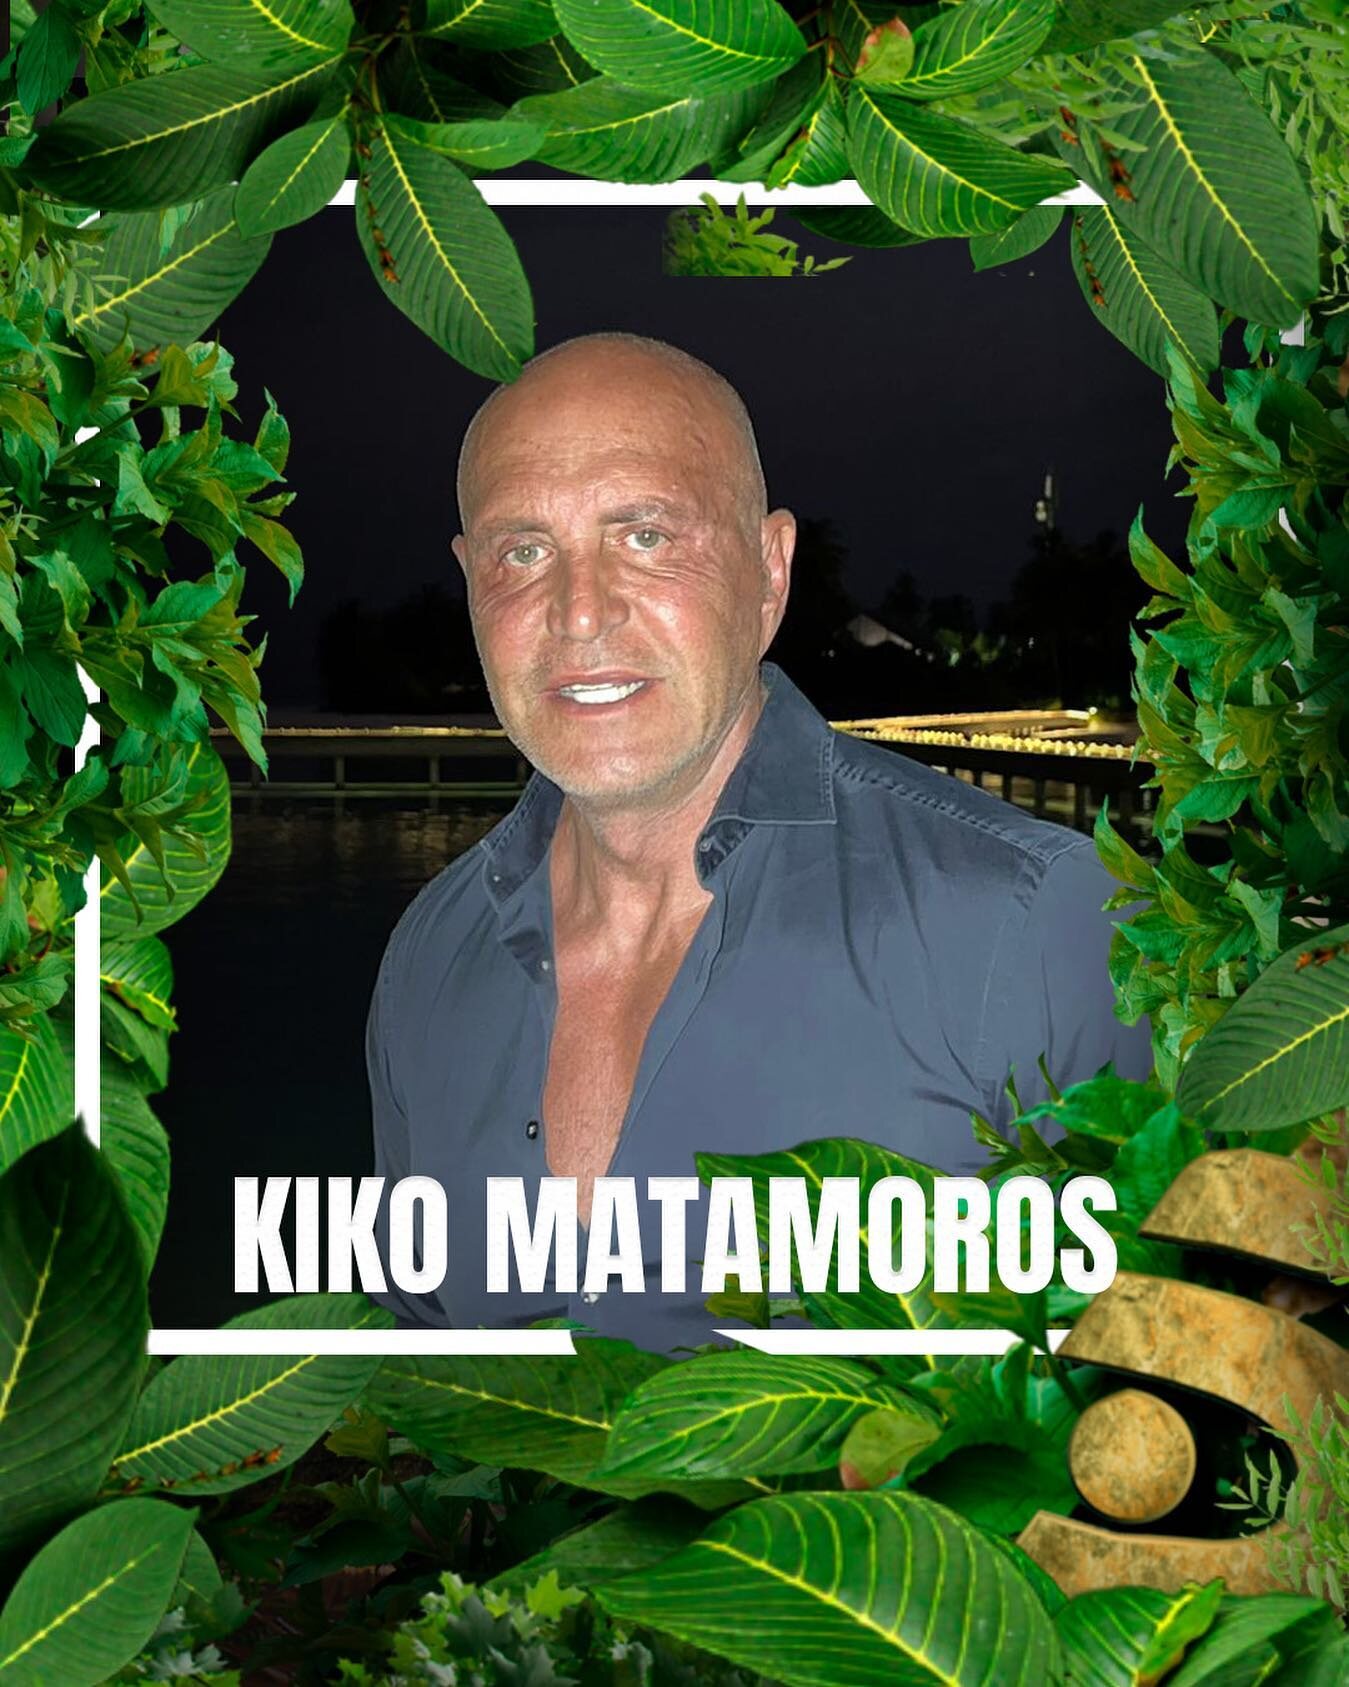 Kiko Matamoros, segundo concursante confirmado de 'Supervivientes 2022' | Foto: Instagram